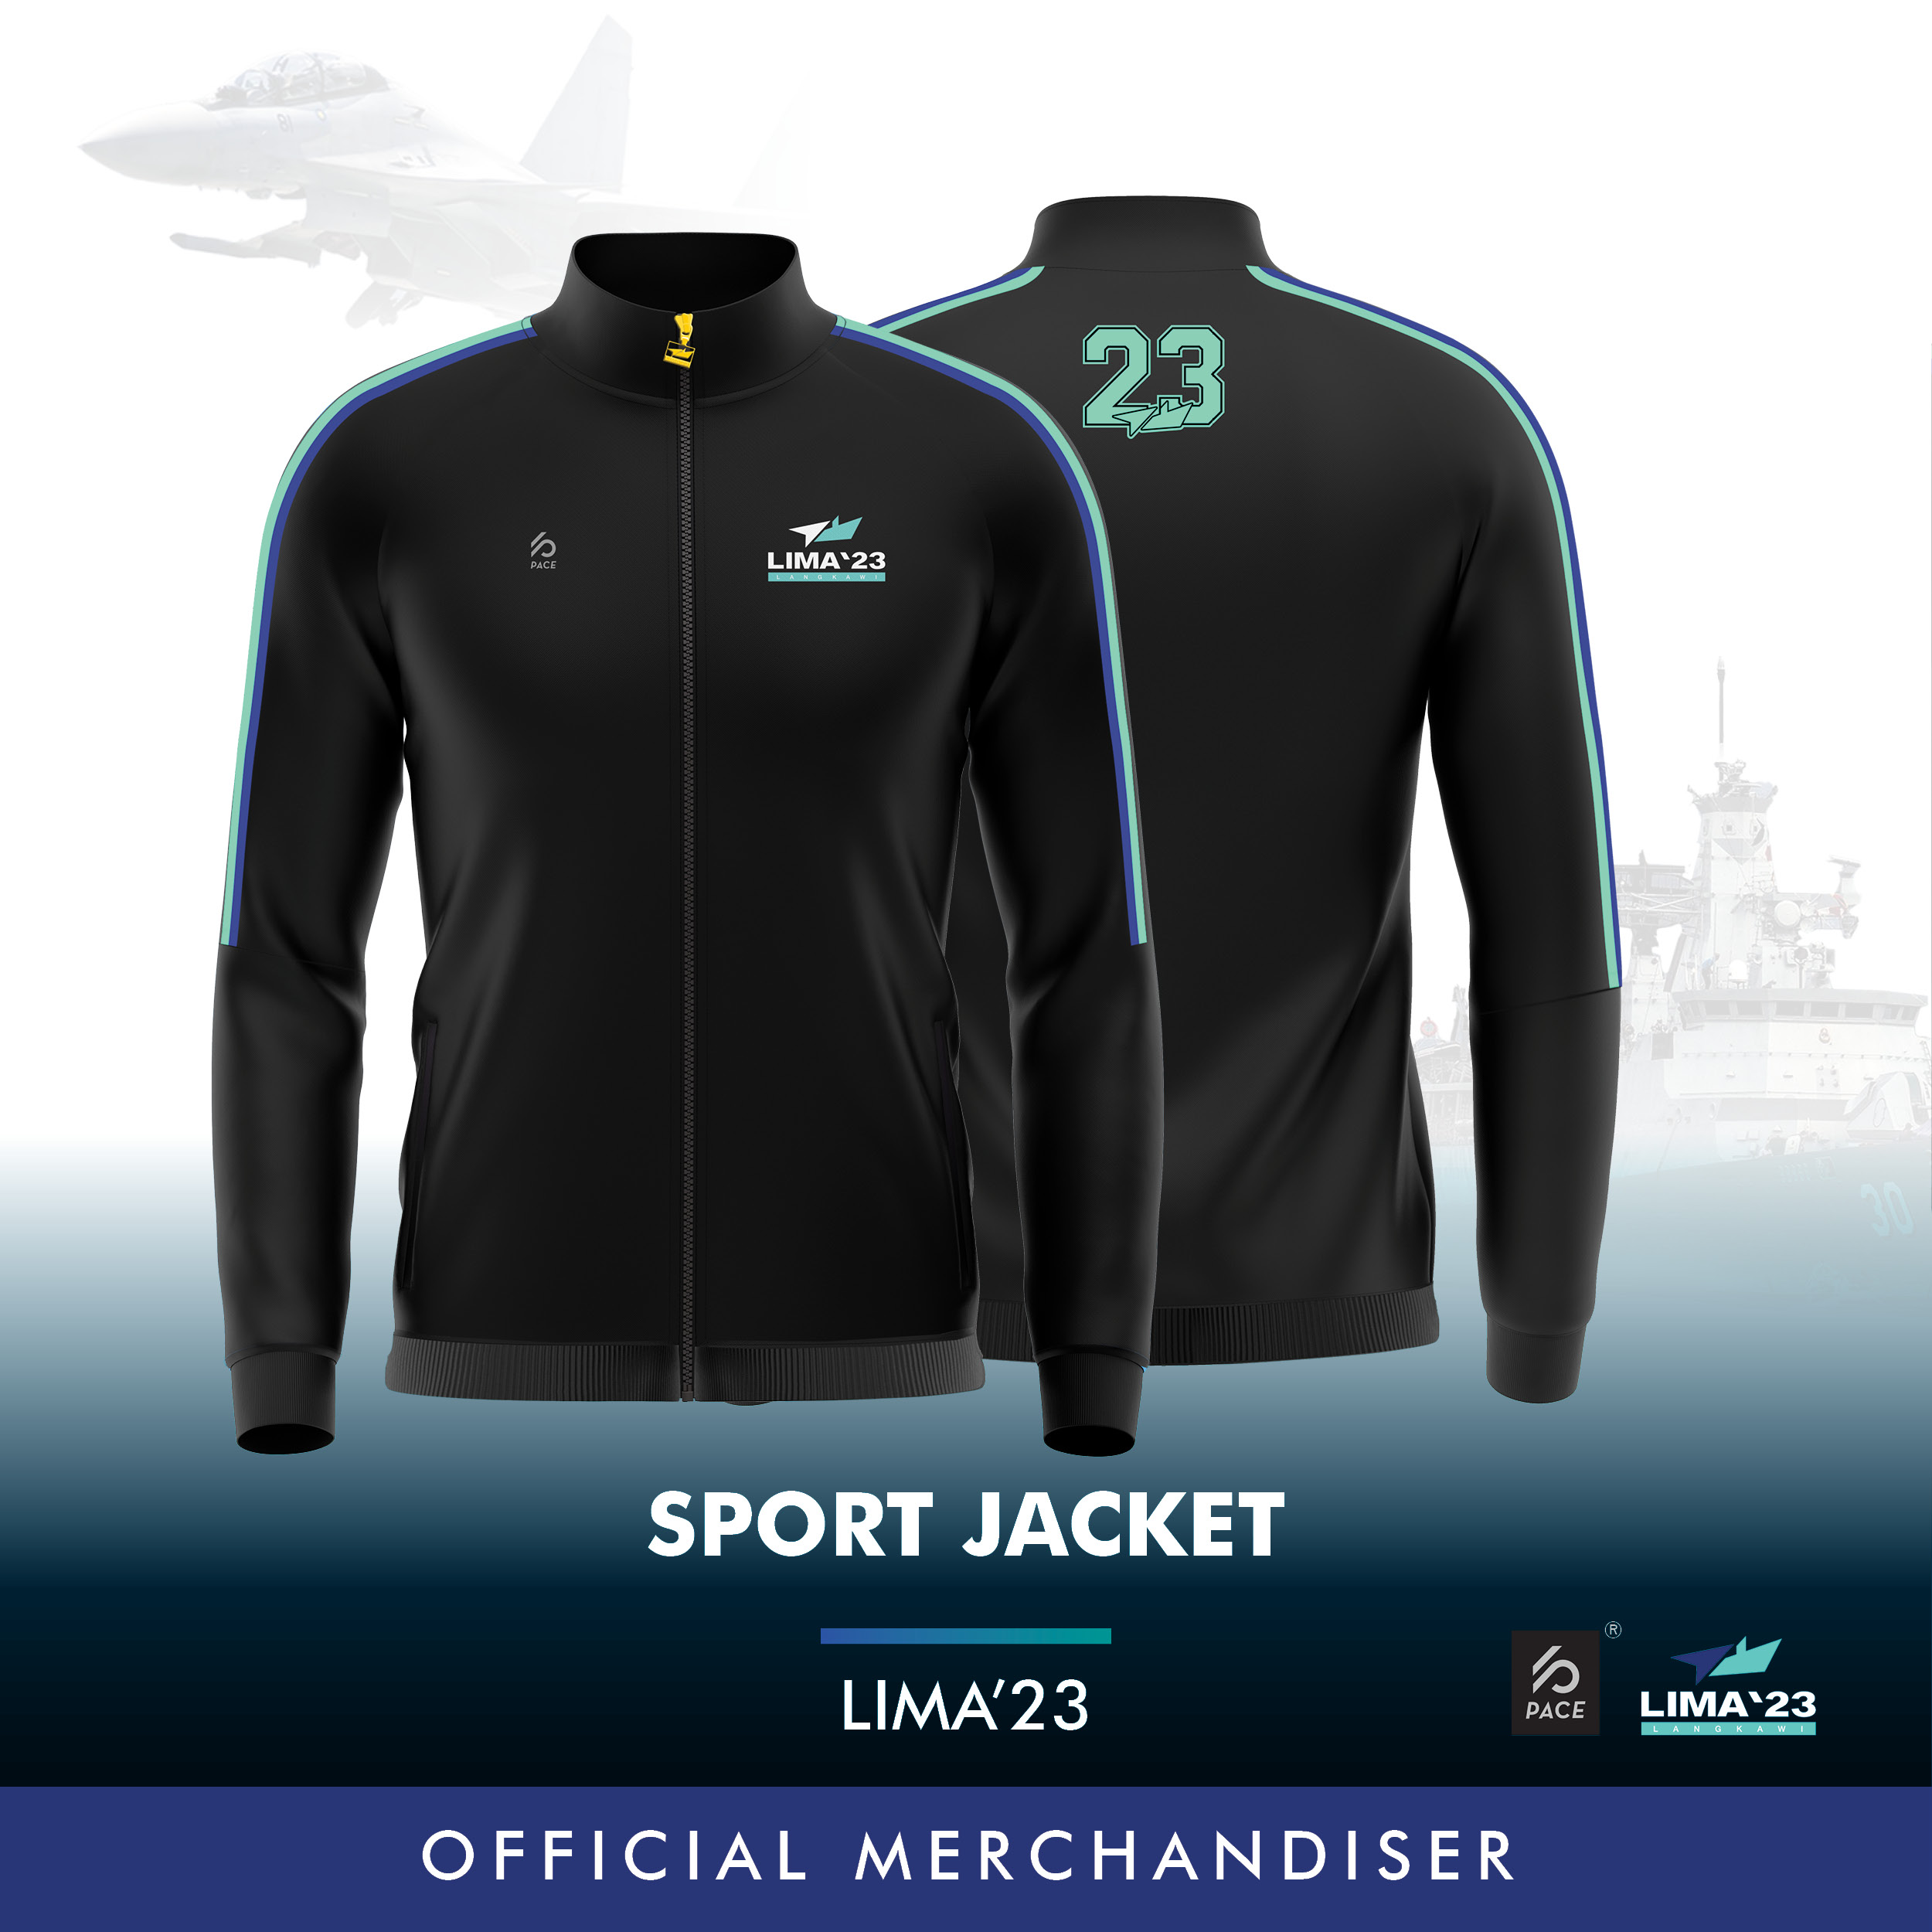 Lima `23 Sport Jacket